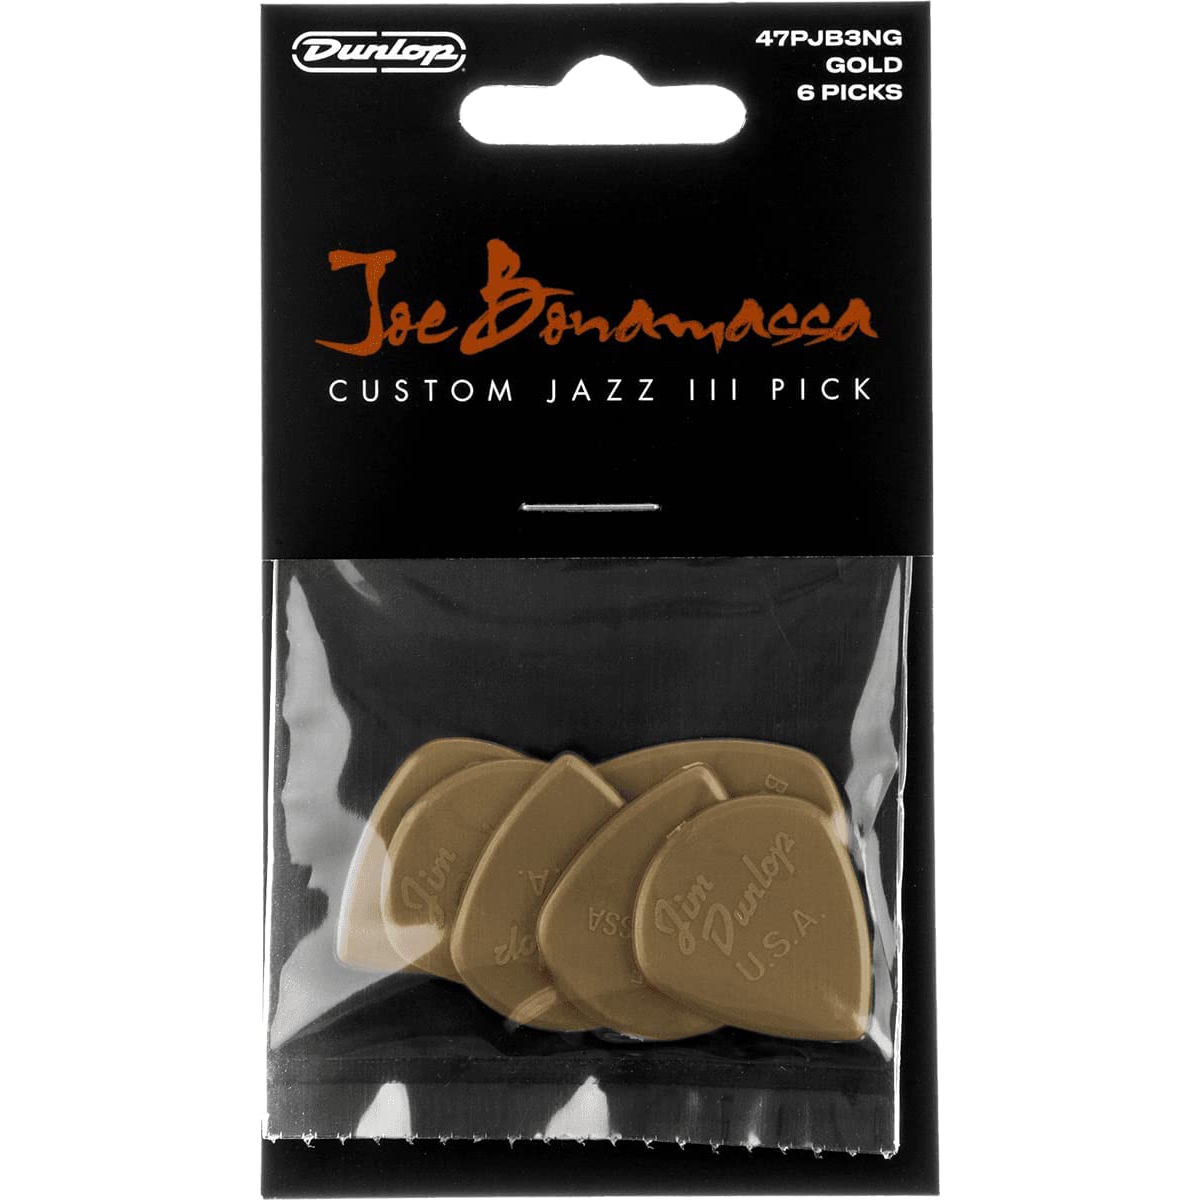 Jim Dunlop 47PJB3NG Joe Bonamassa Jazz III Pena (6lı Paket)